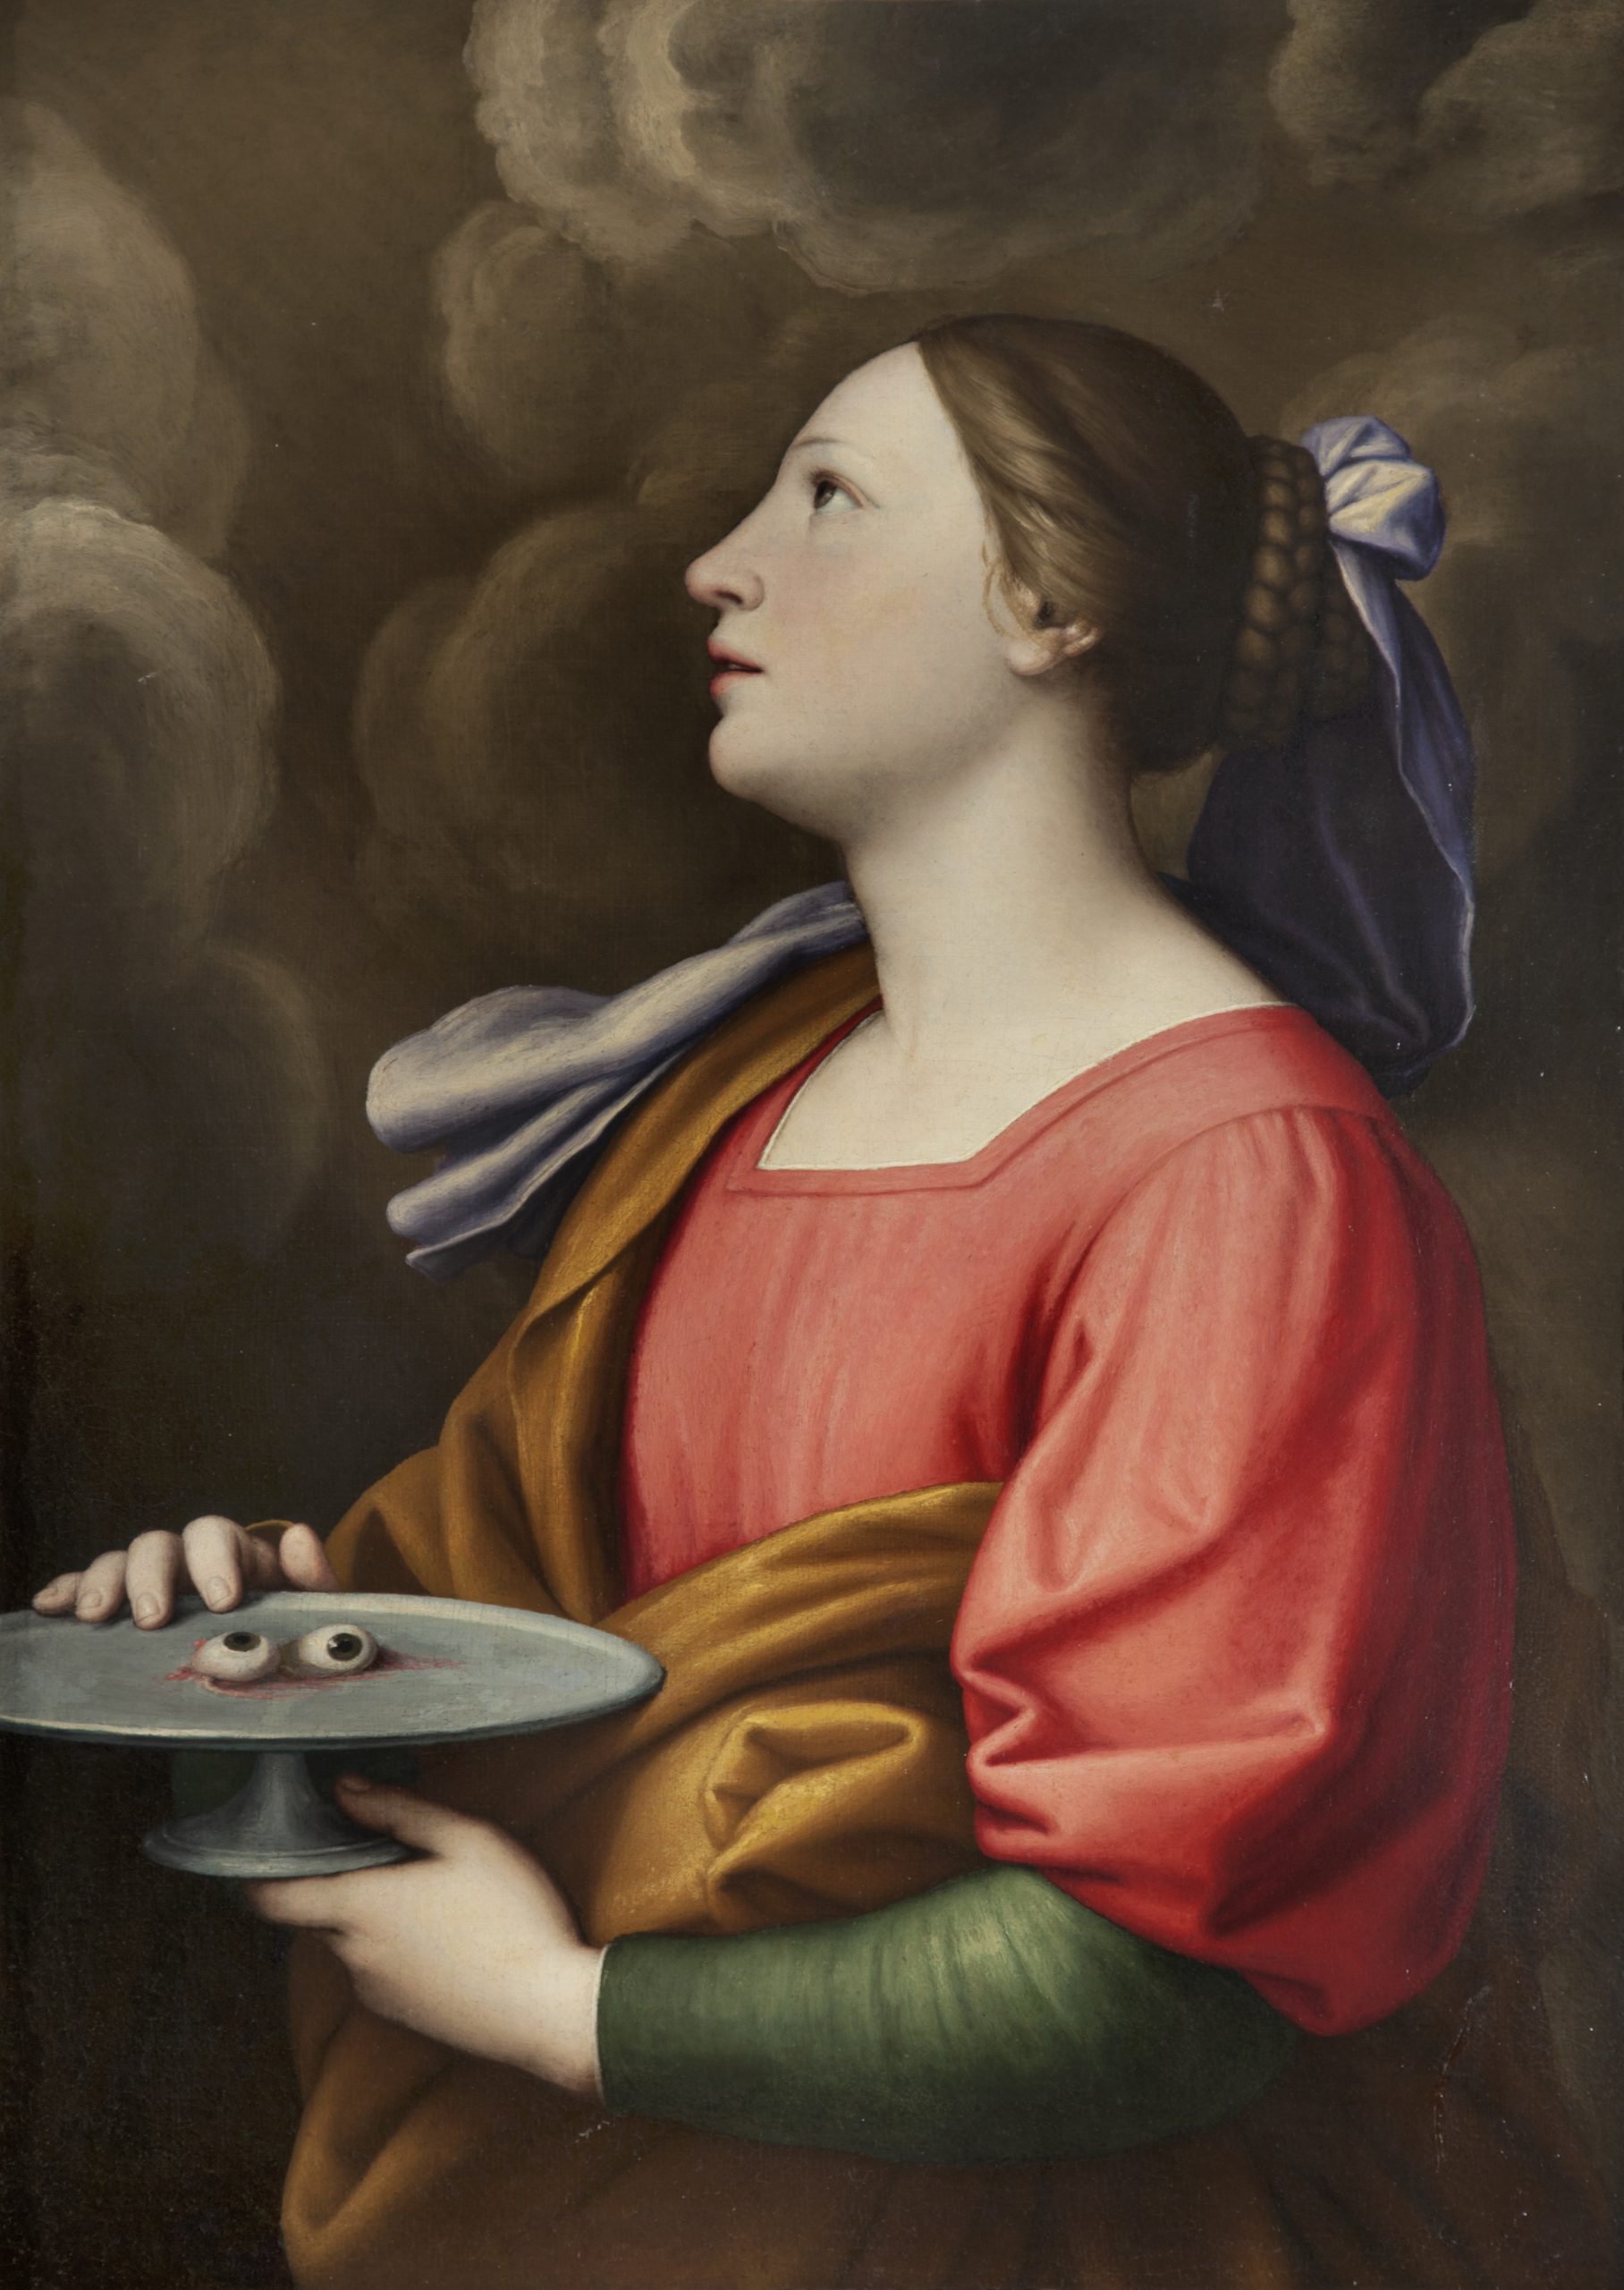 A woman looks towards heaven, holding a plate of eyeballs.